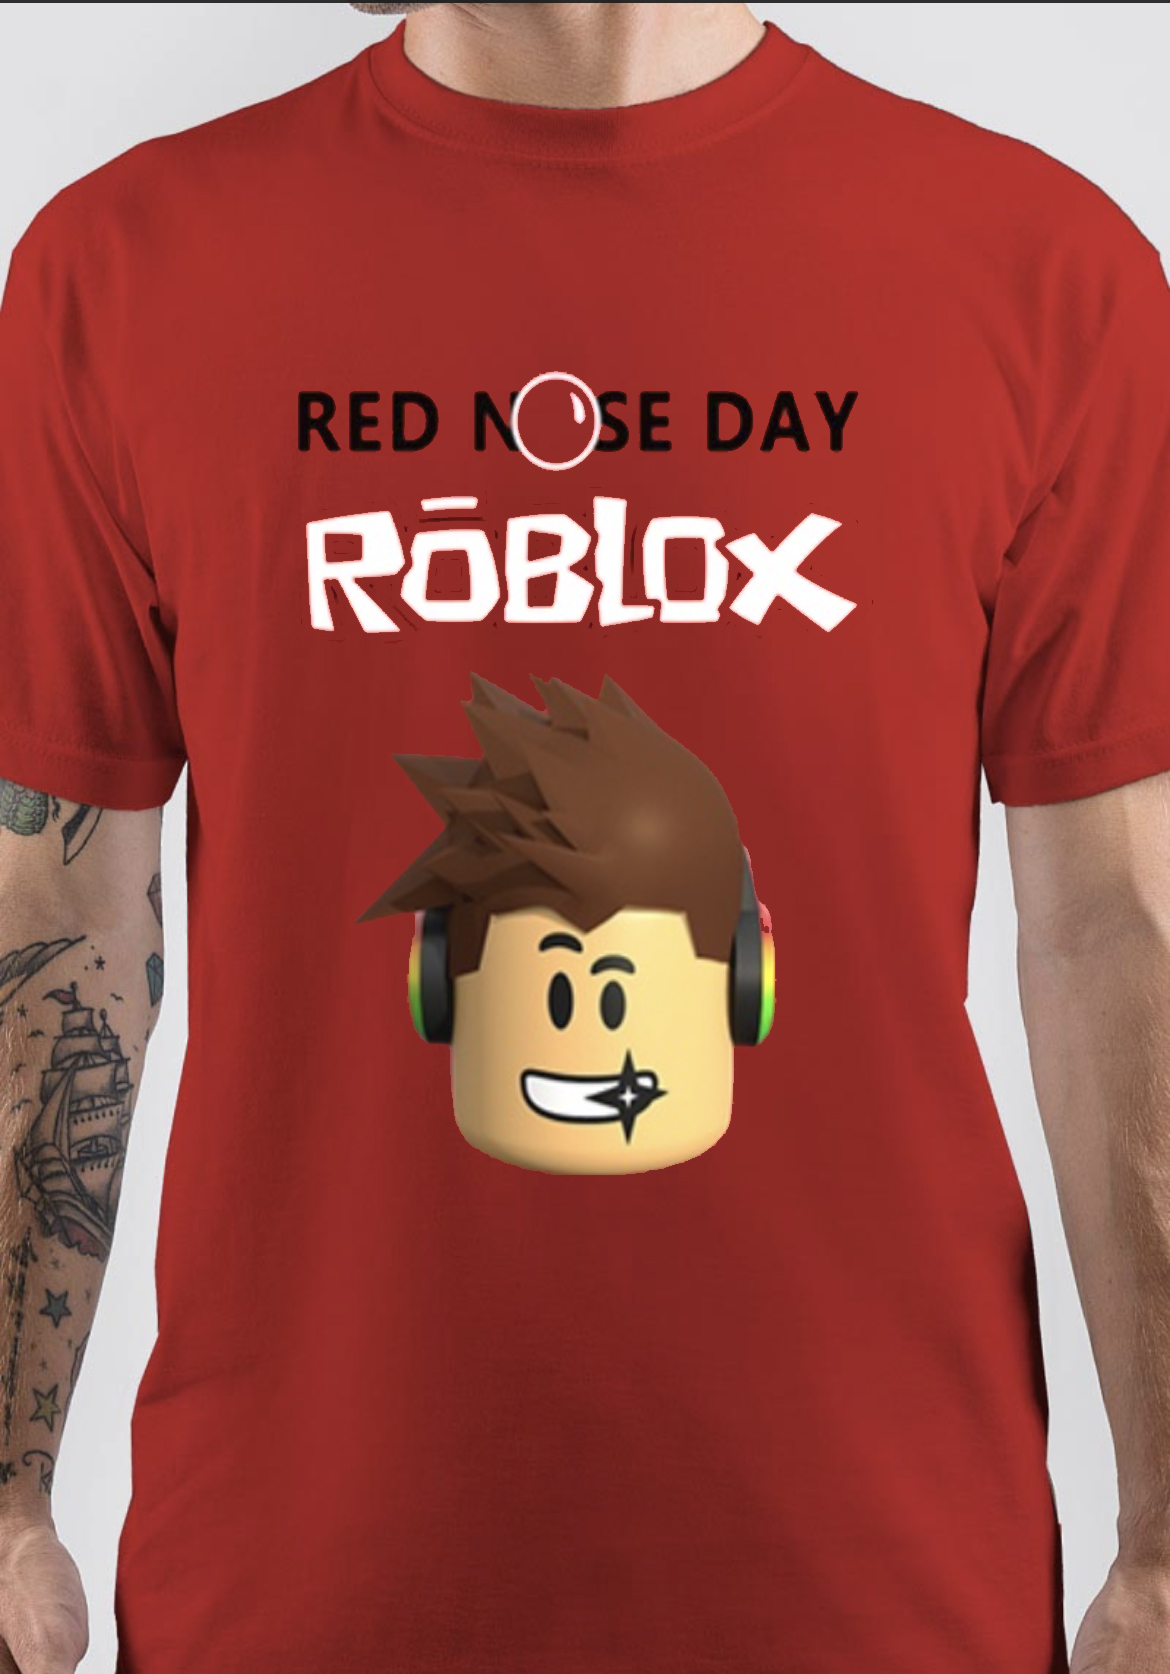 Red Roblox T-Shirt TPKJ3 in 2023